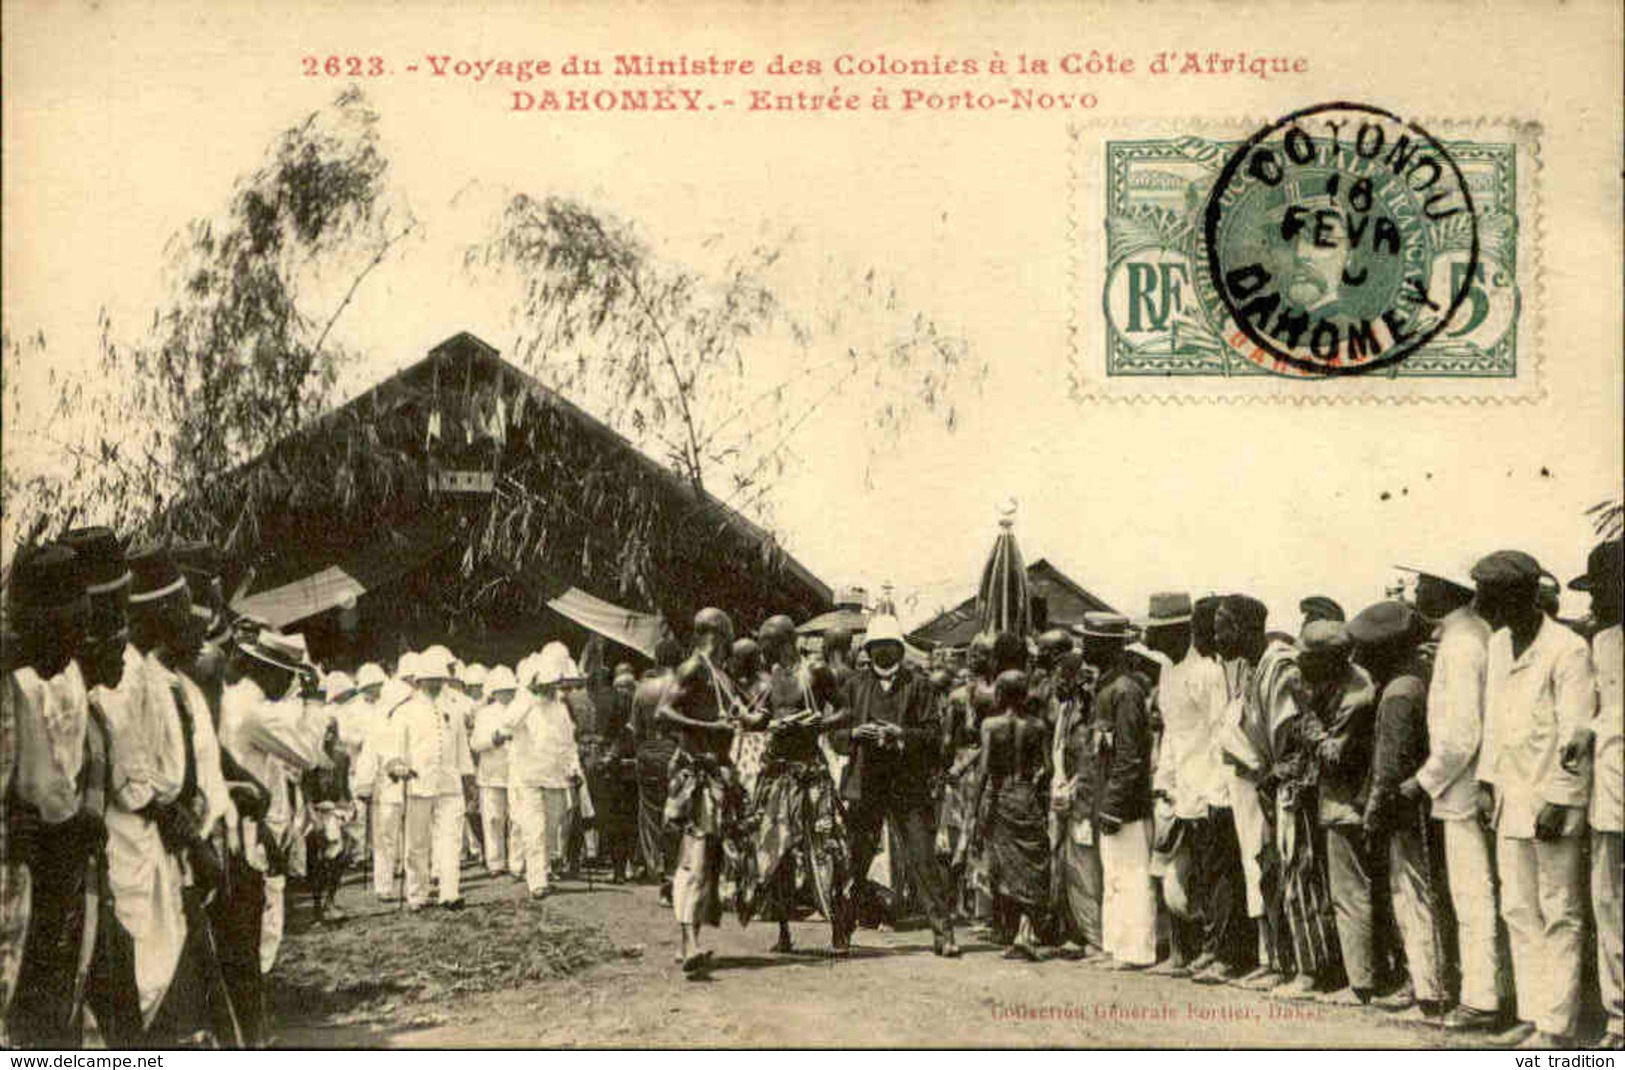 DAHOMEY - Carte Postale - Voyage Du Ministre Des Colonies Au Dahomey, Entrée à Porto Novo - L 53260 - Dahomey